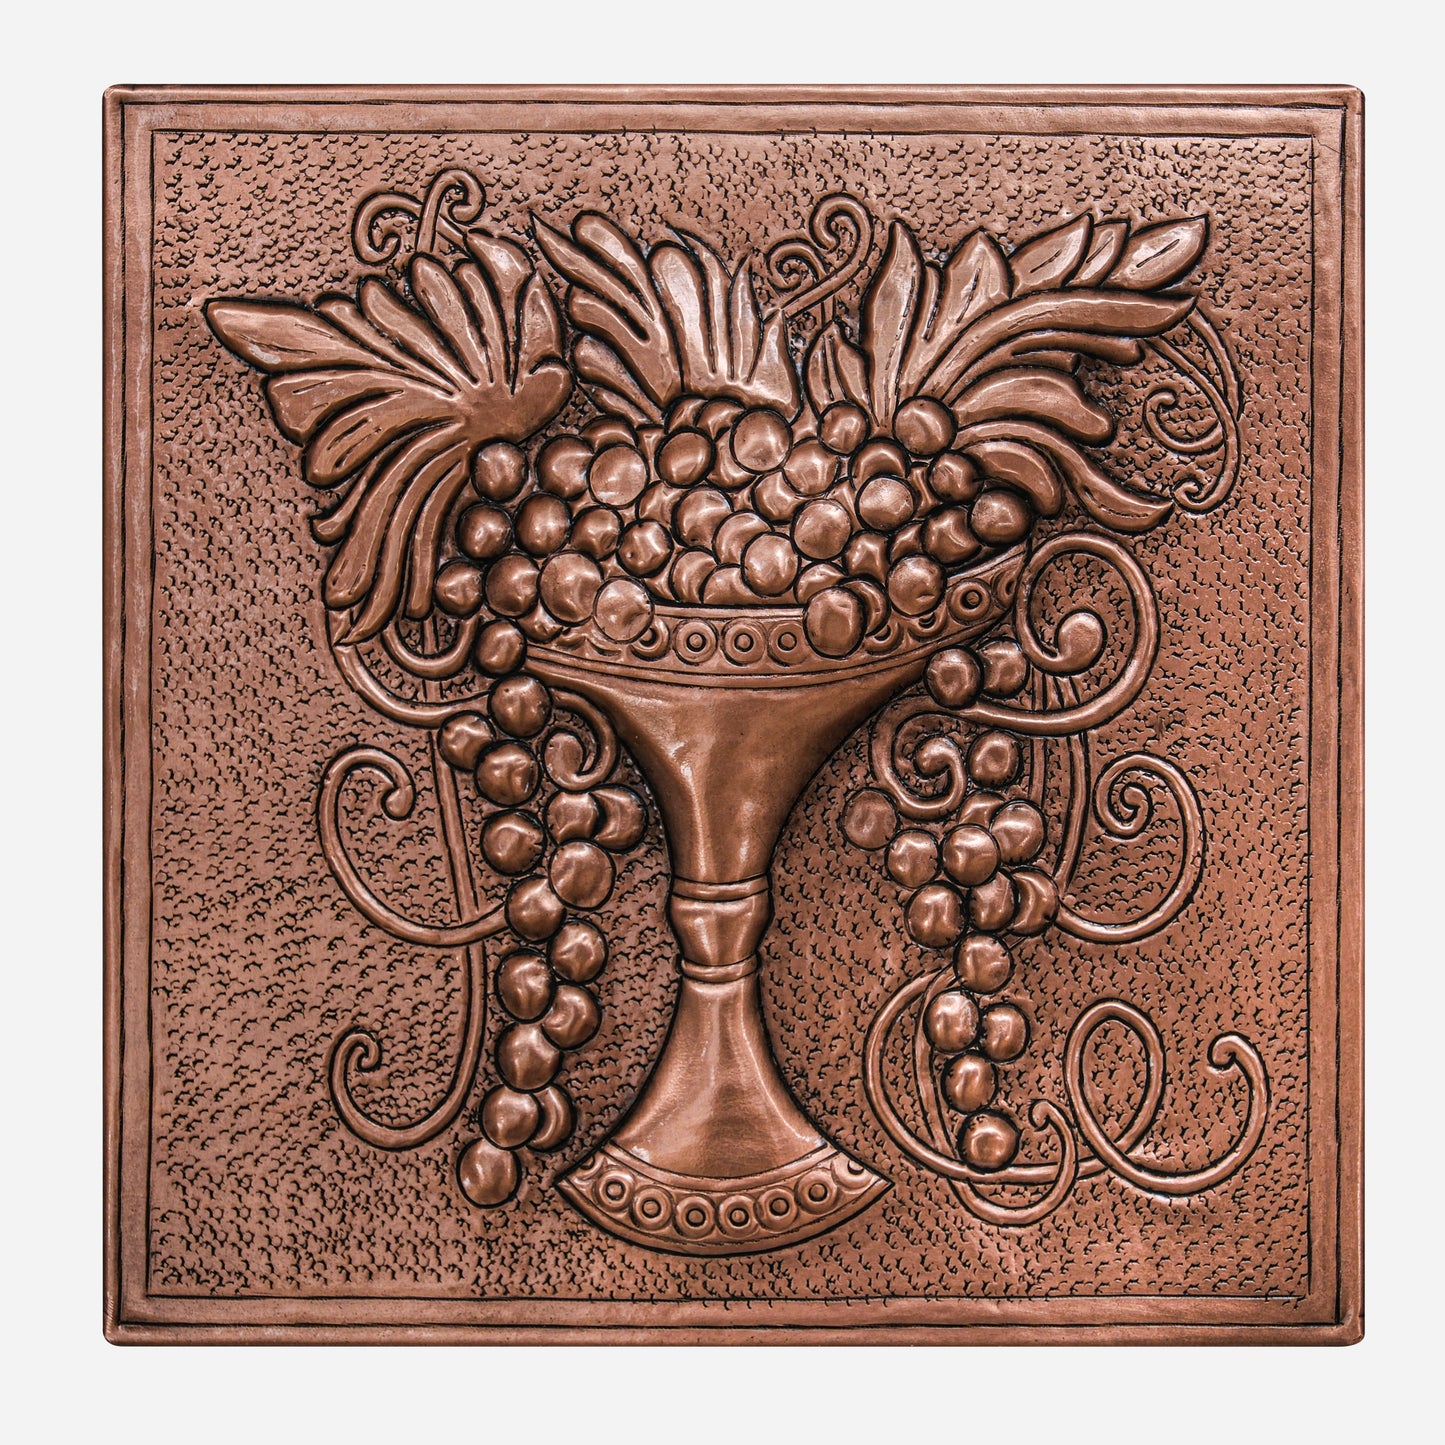 Copper Tuscan Backsplash (Grape Vines on a Plate)